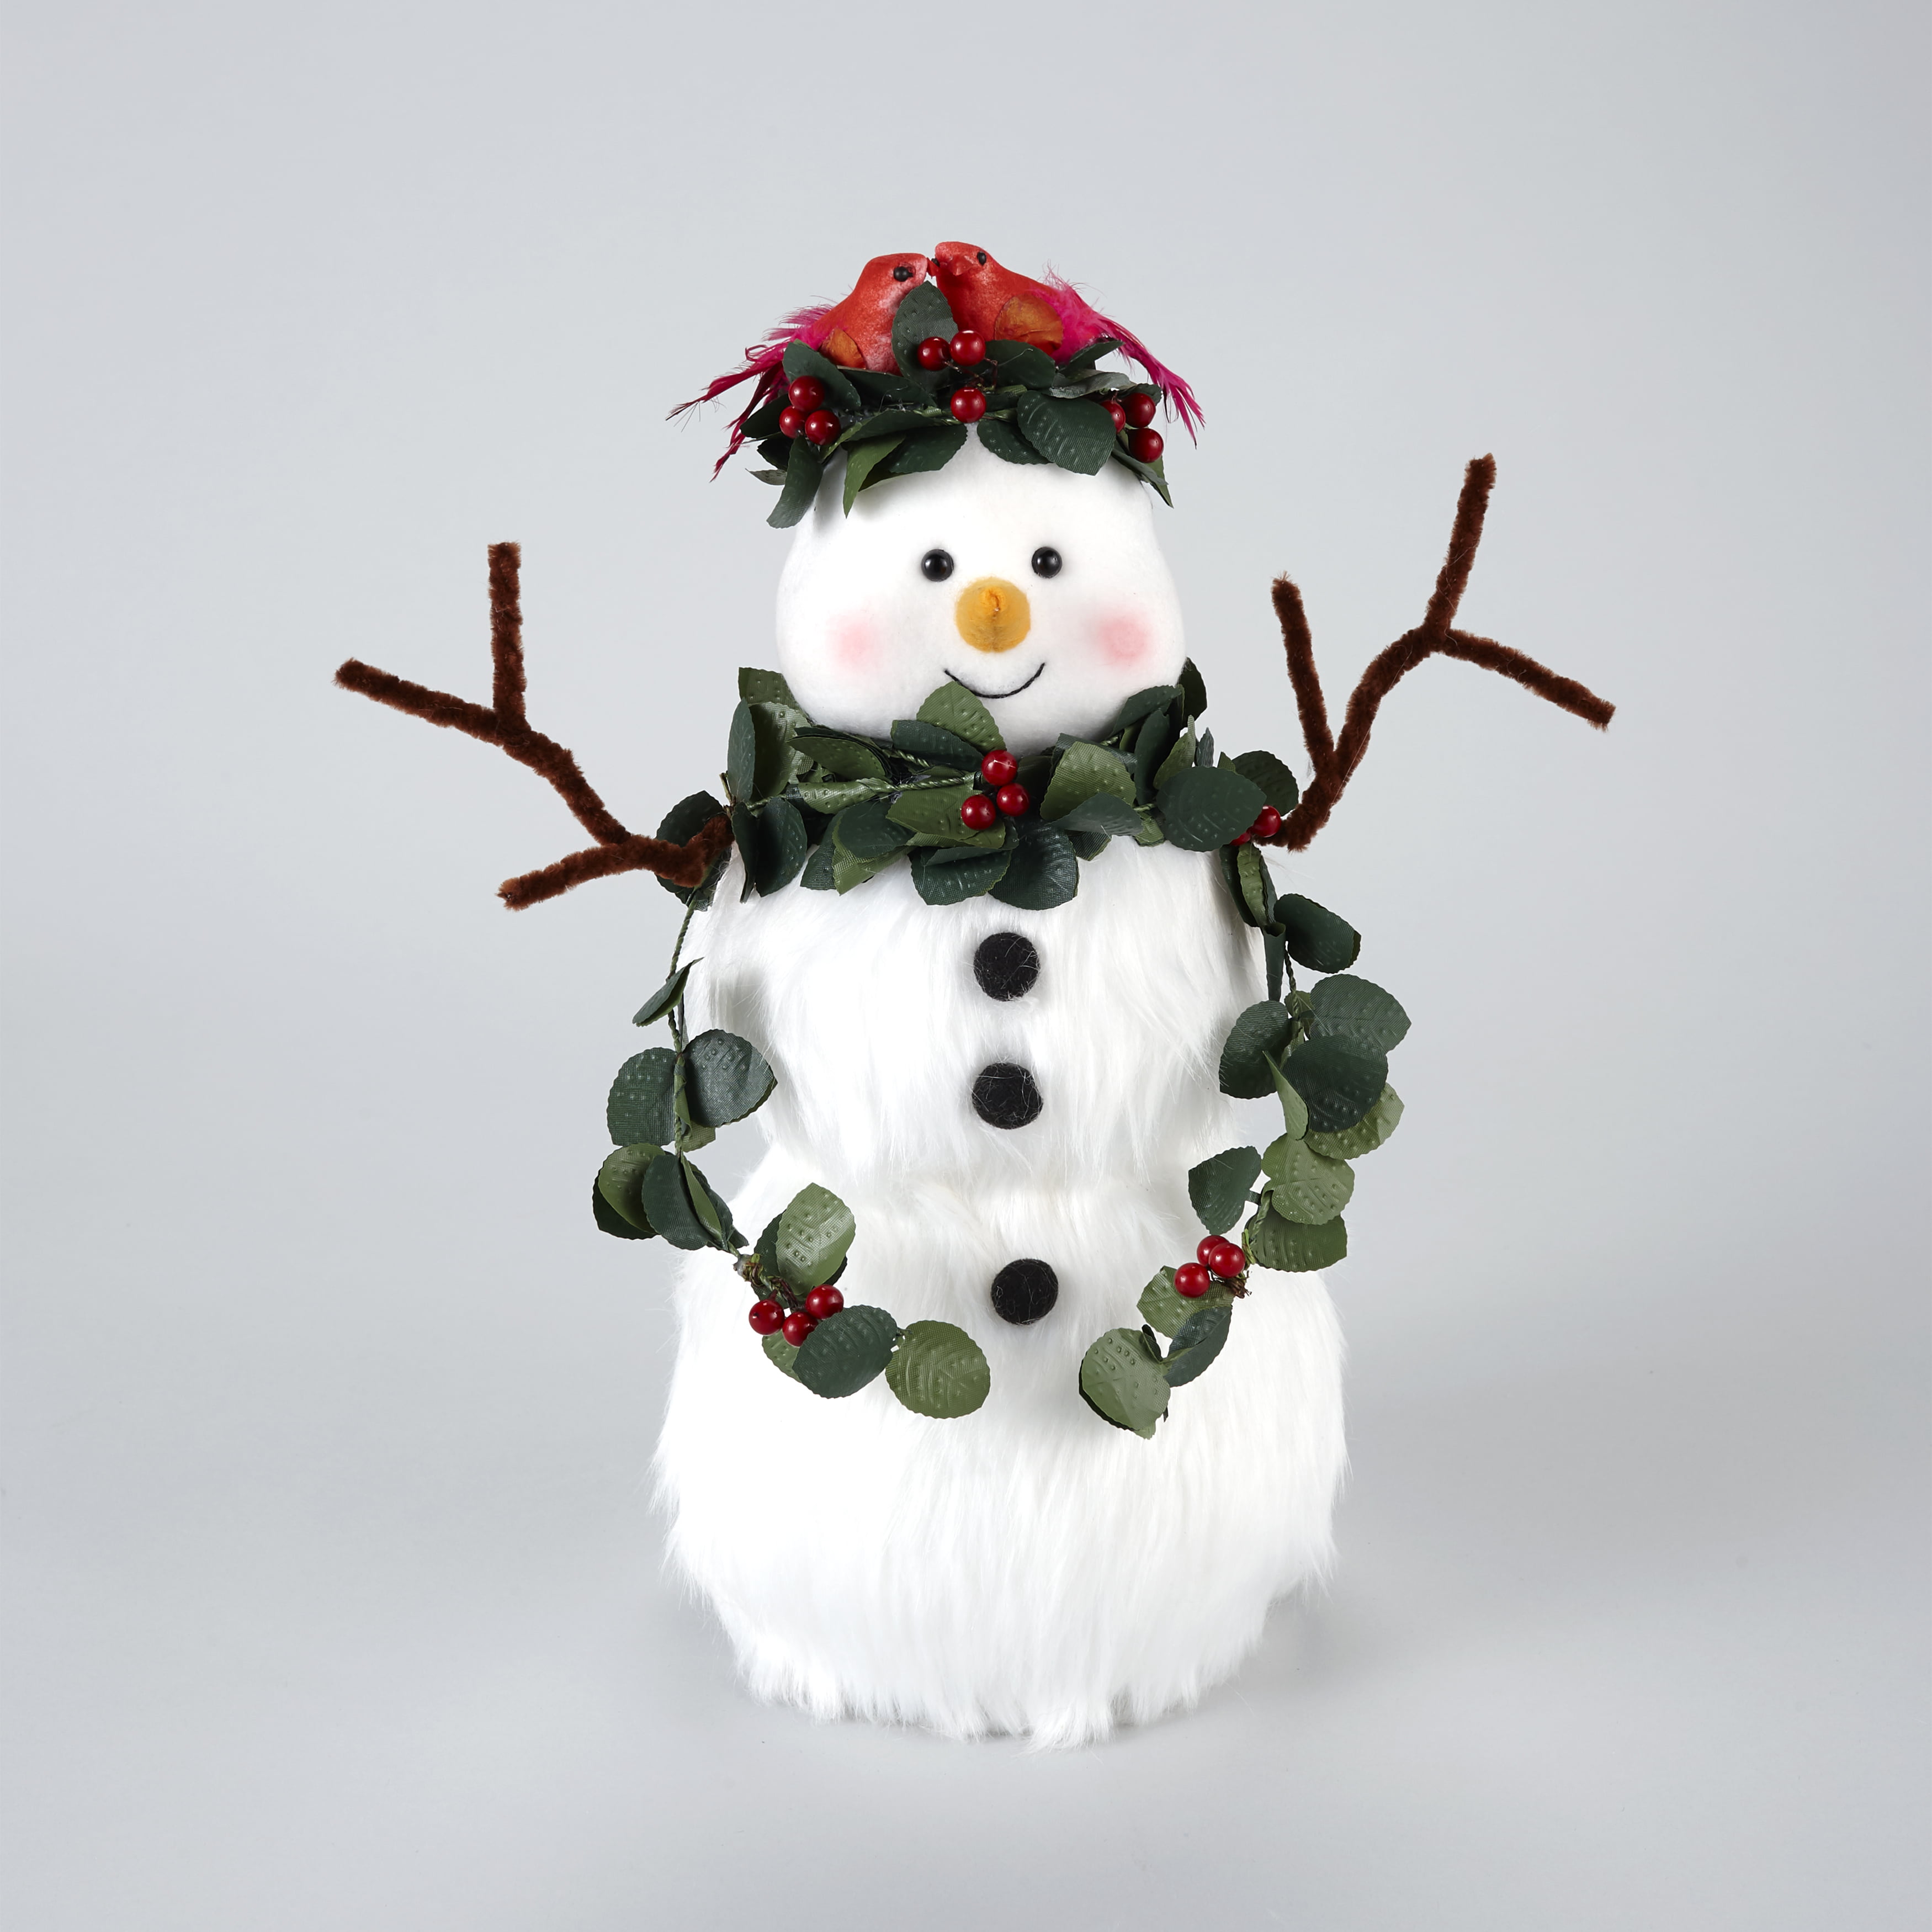 The Holiday Aisle Resin Snowman with Cardinal Figurine 